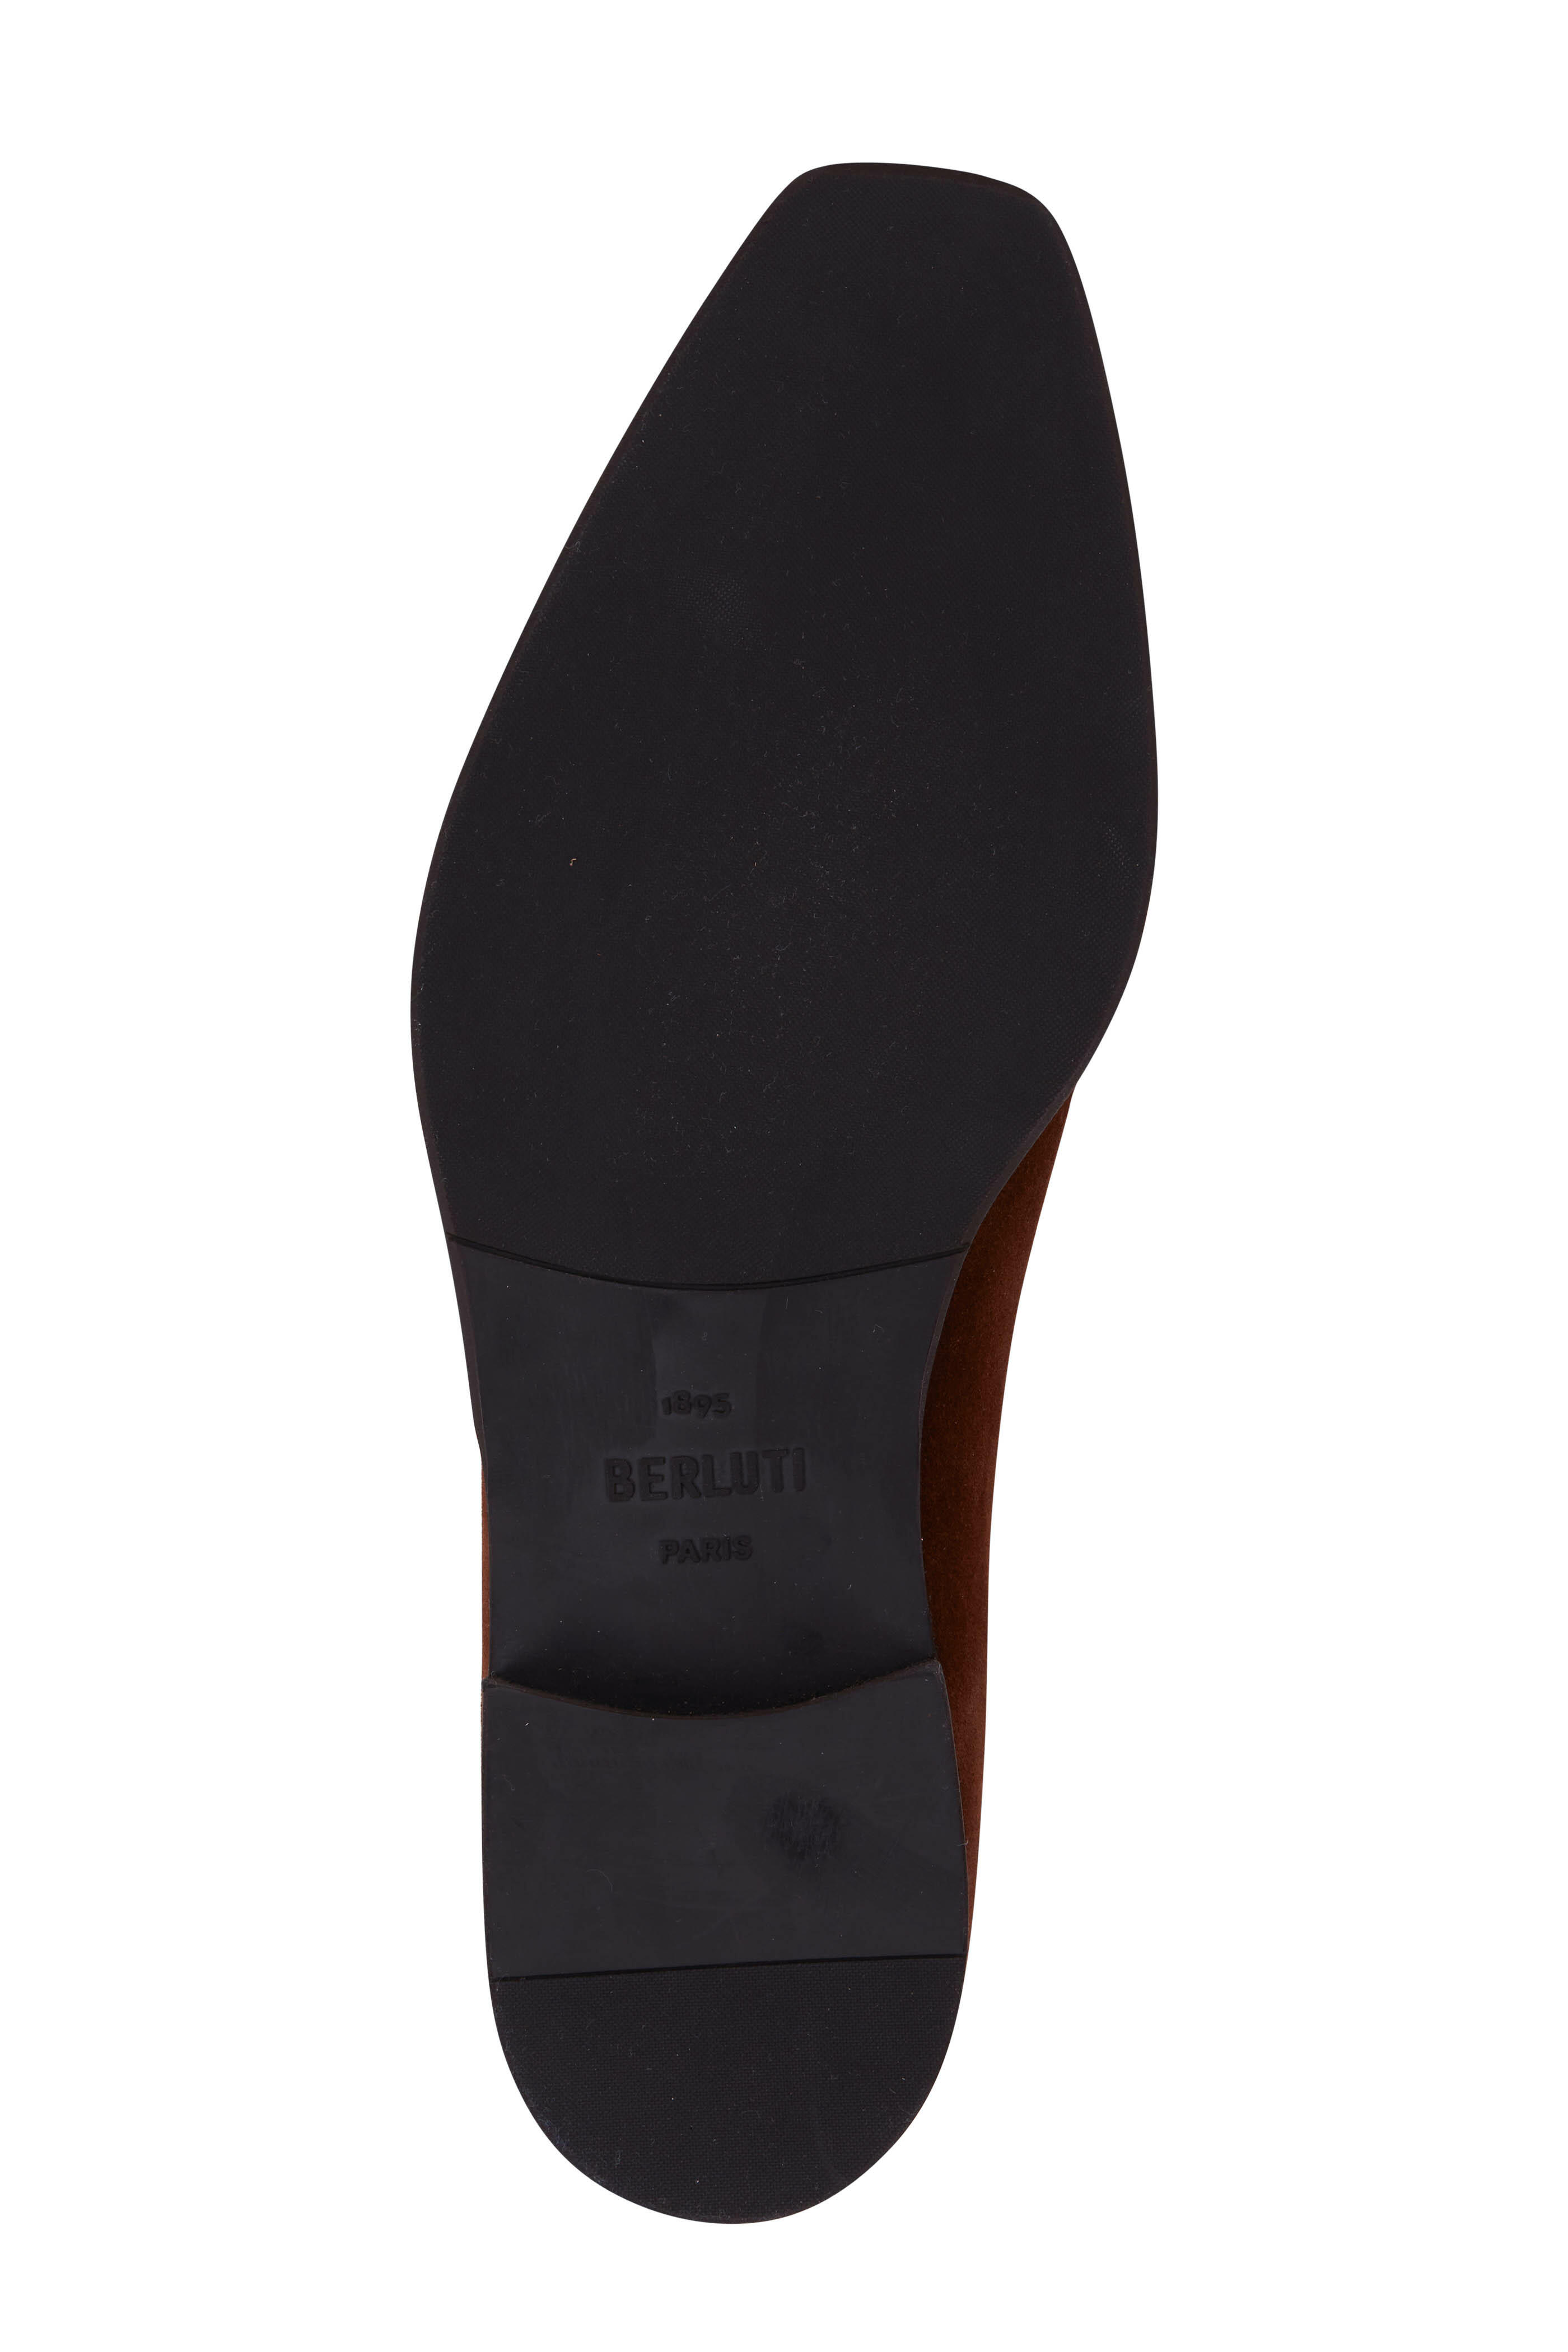 BERLUTI Straight Tip Black Leather Cap Toe Lace-Up Dress Shoes Size UK-8, US-9